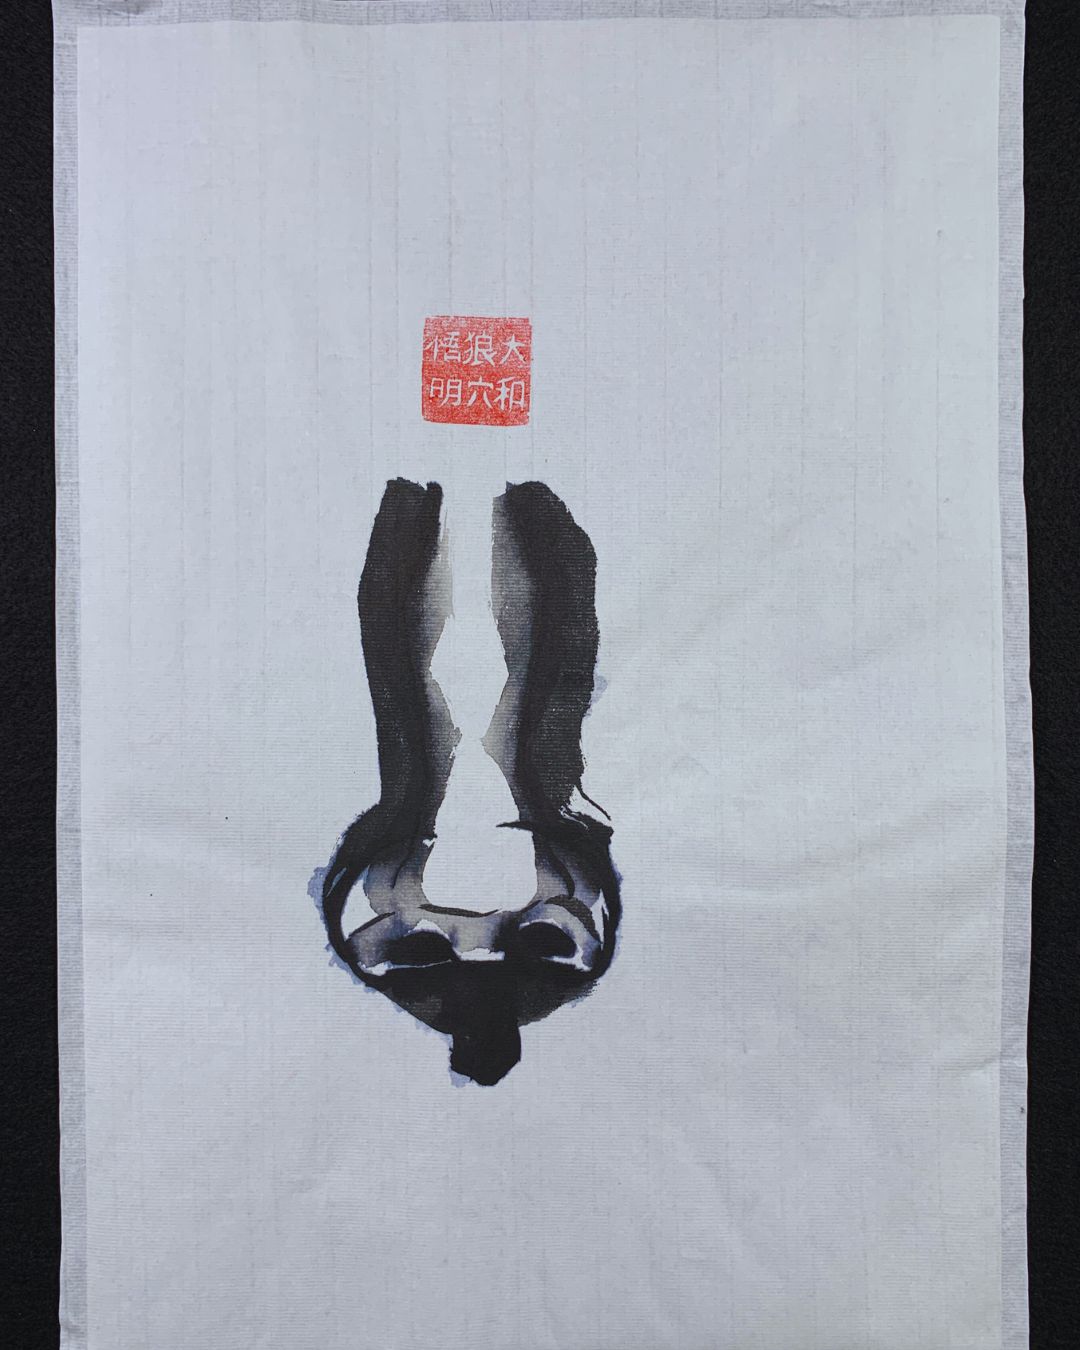 Olfato II. Serie Héroes. Sumi-e. Tinta china sobre papel de arroz. David Lopera Gómez. Pintura. Obra compleata representando una nariz